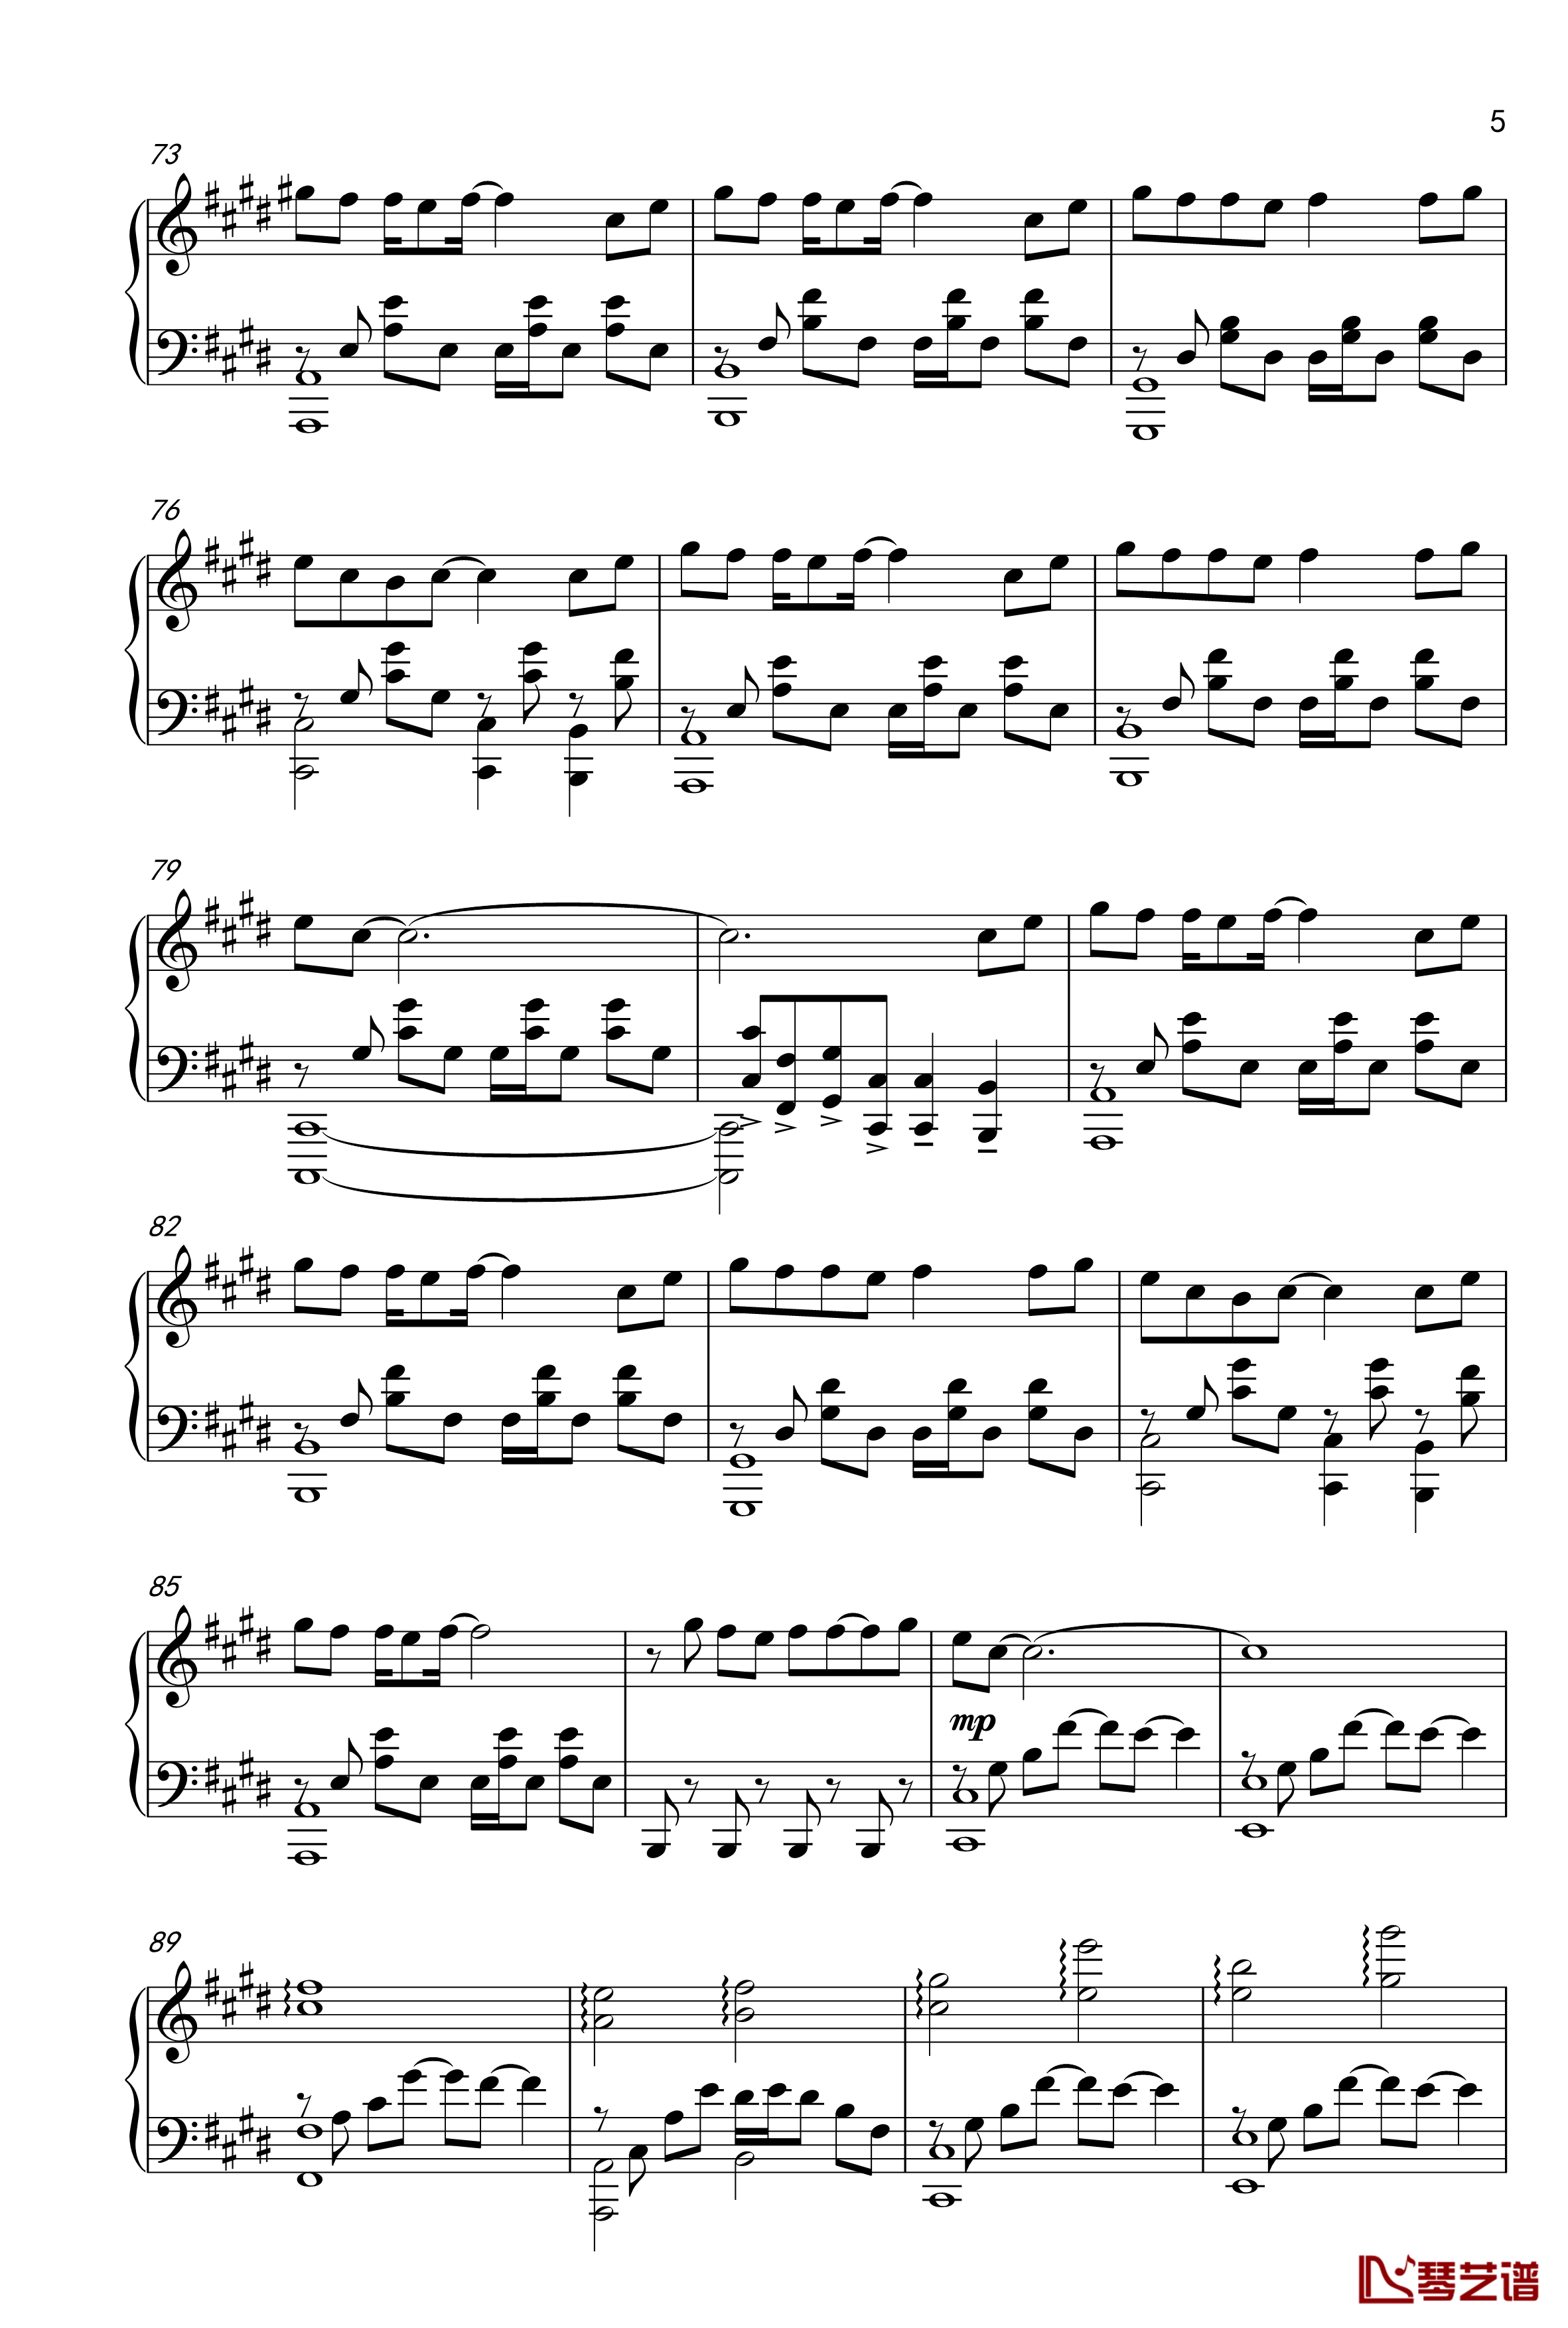 OVERLAP 钢琴谱-《游戏王》第一部190-224话OP-游戏王5